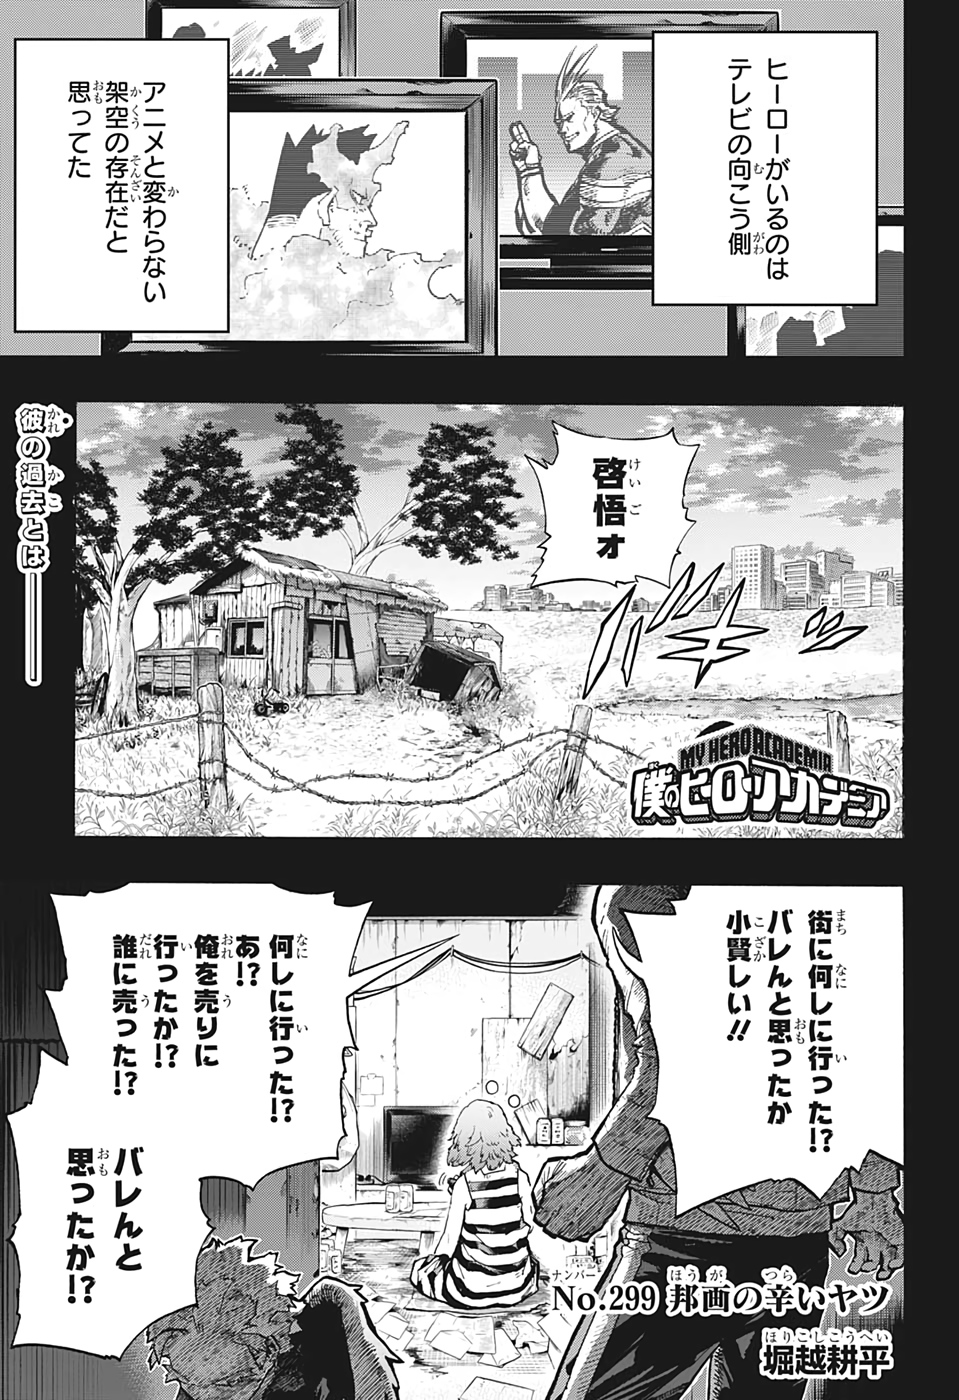 Boku no Hero Academia - Chapter 299 - Page 1